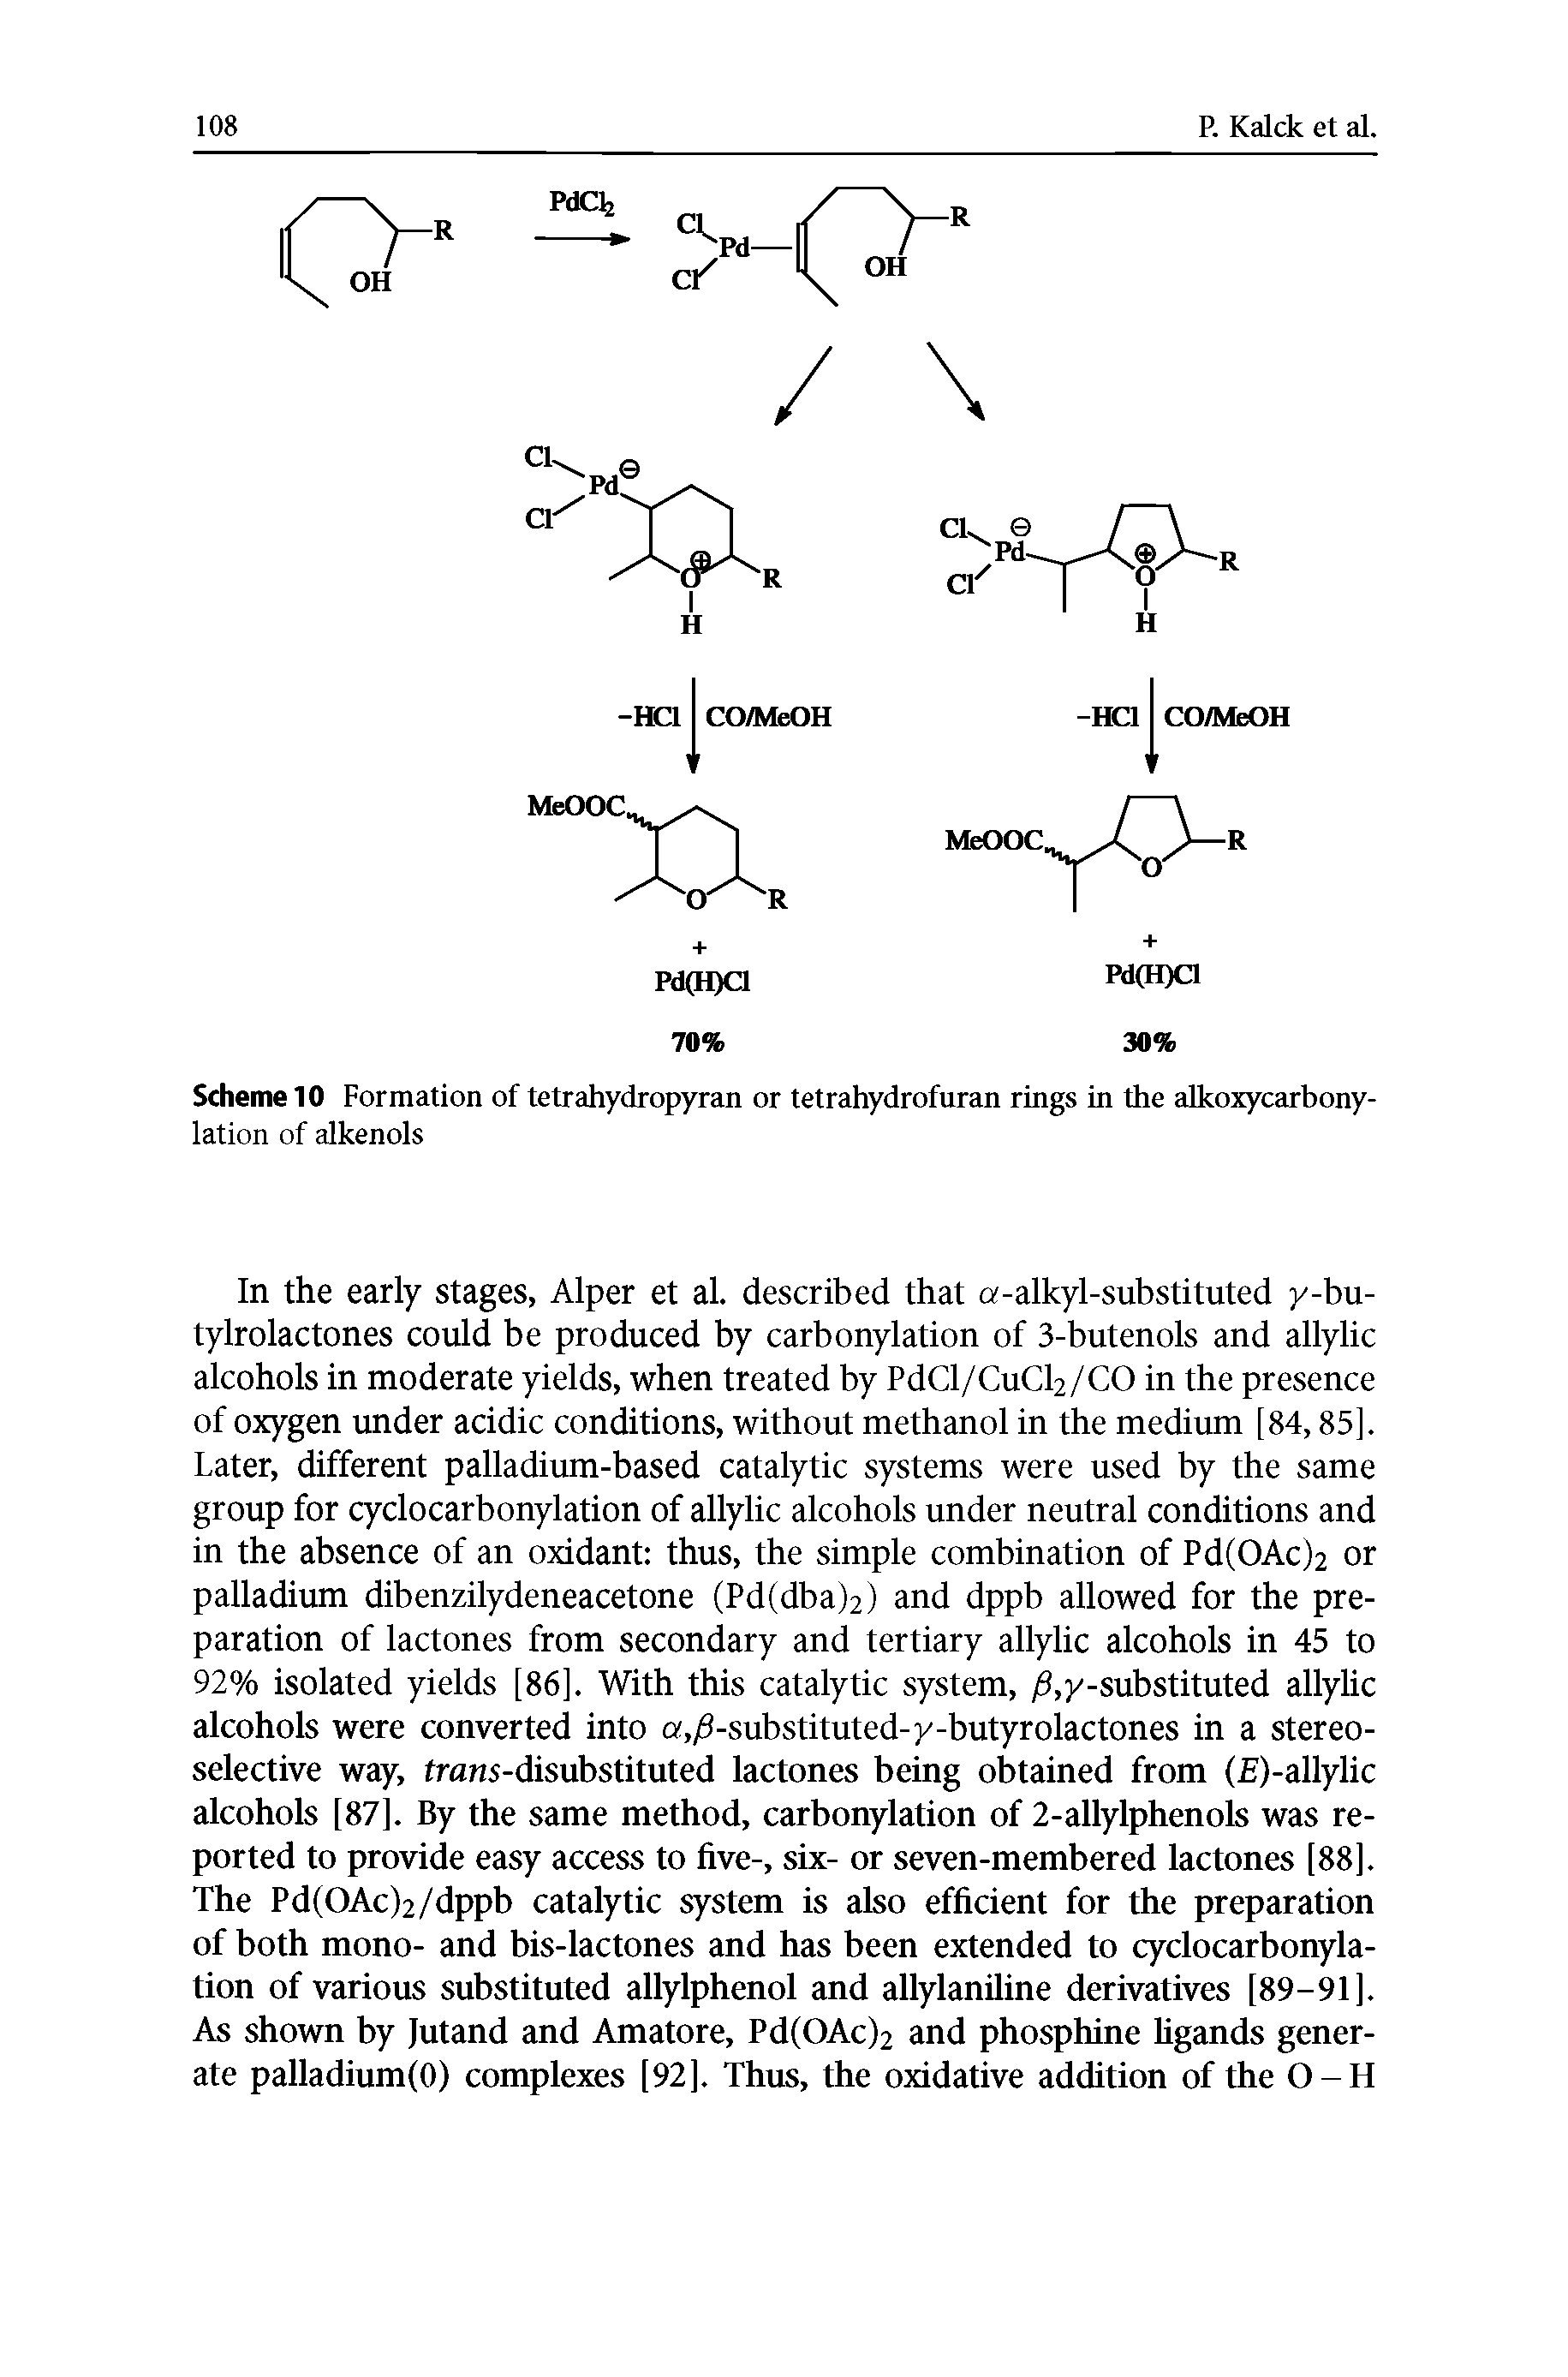 Scheme 10 Formation of tetrahydropyran or tetrahydrofuran rings in the alkoxycarbony-lation of alkenols...